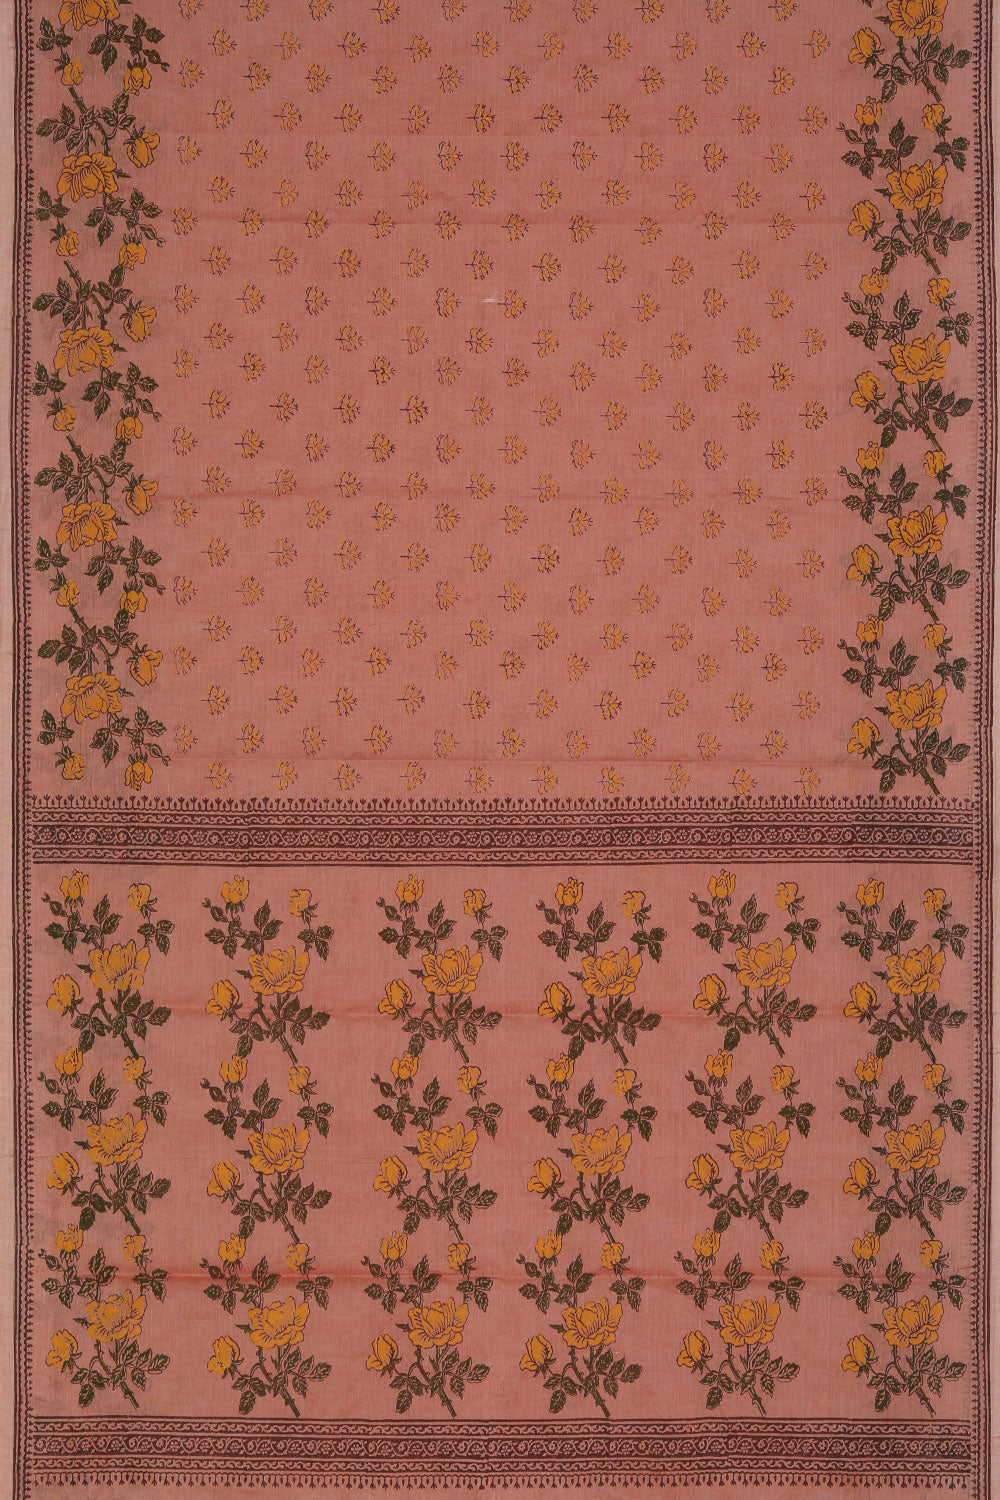 Hand block printed cotton saree